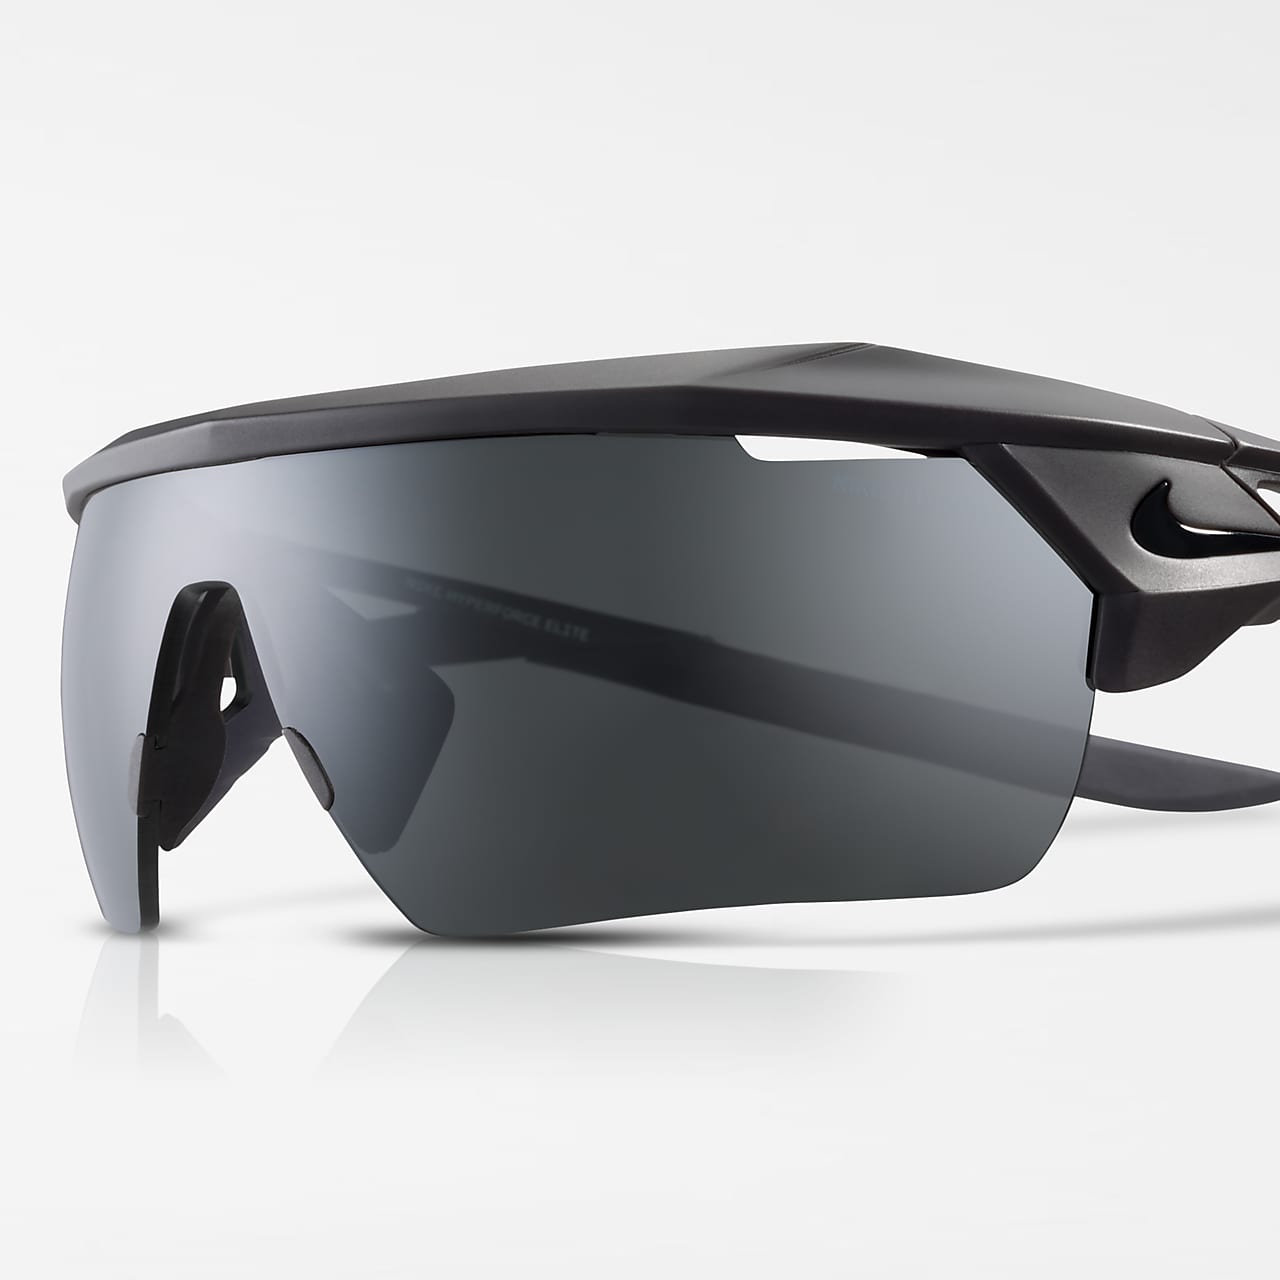 Nike Hyperforce Elite Mirrored Sunglasses